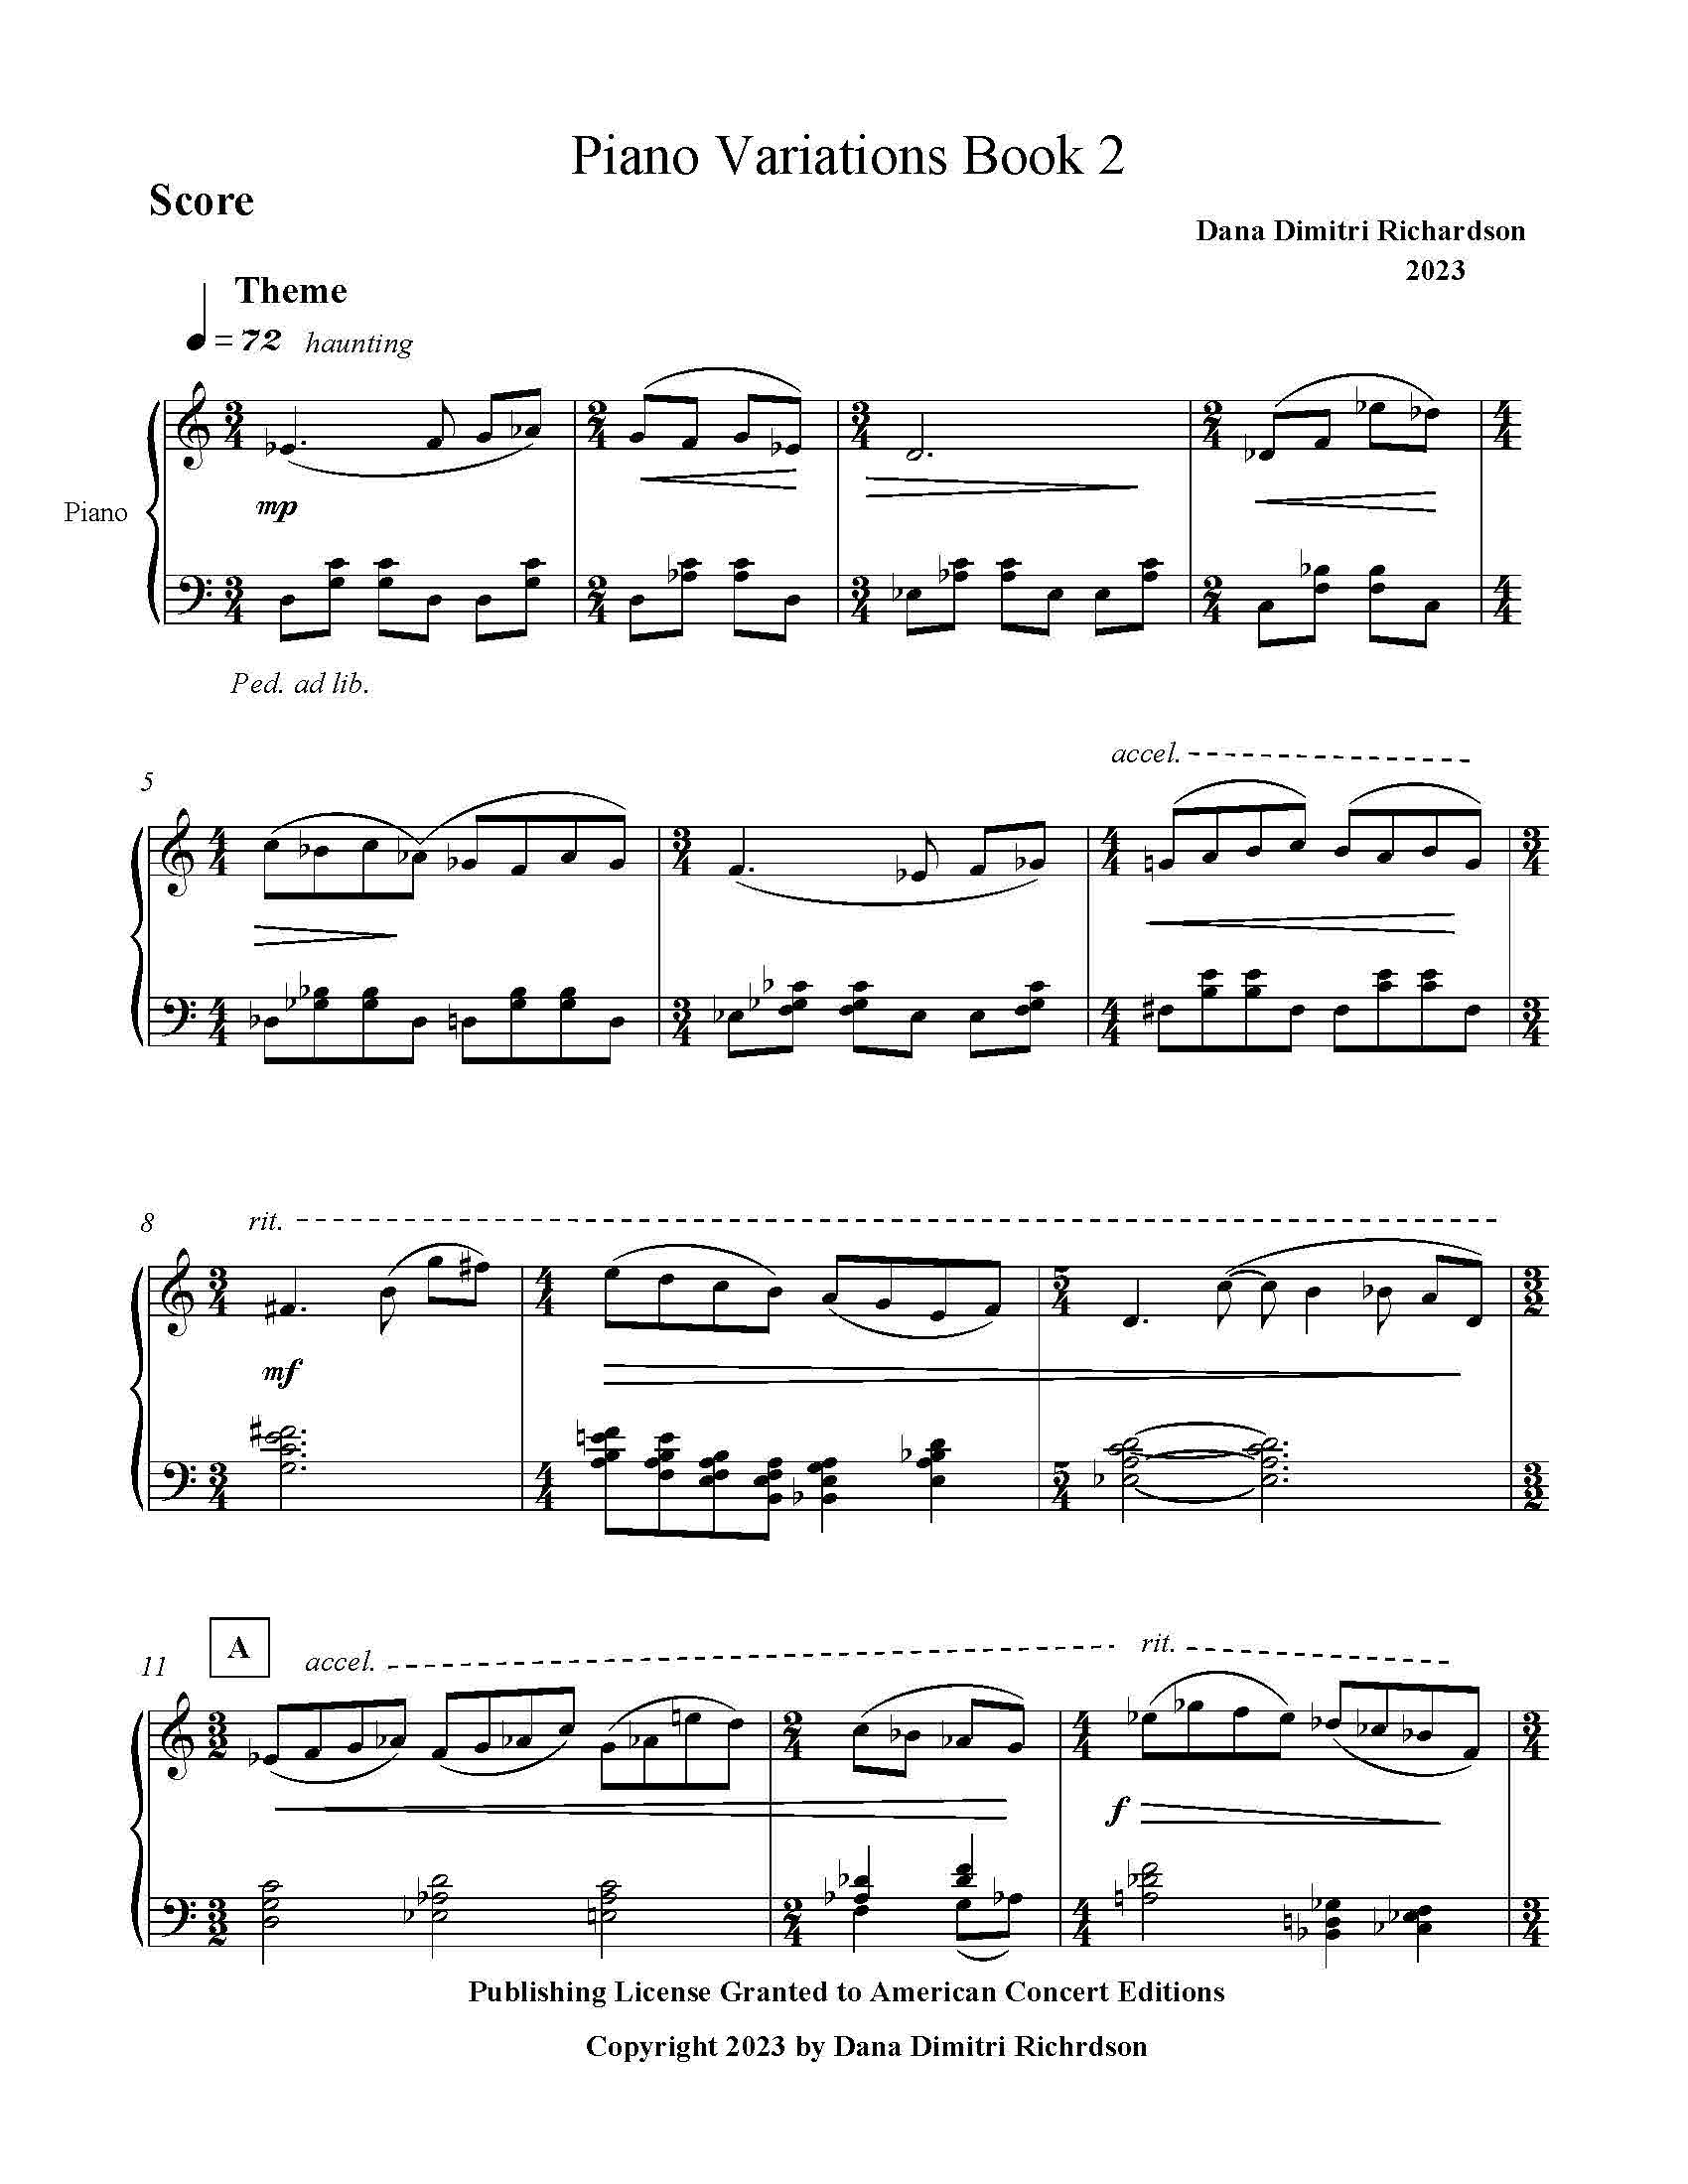 Richardson: Piano Variations - Book 2